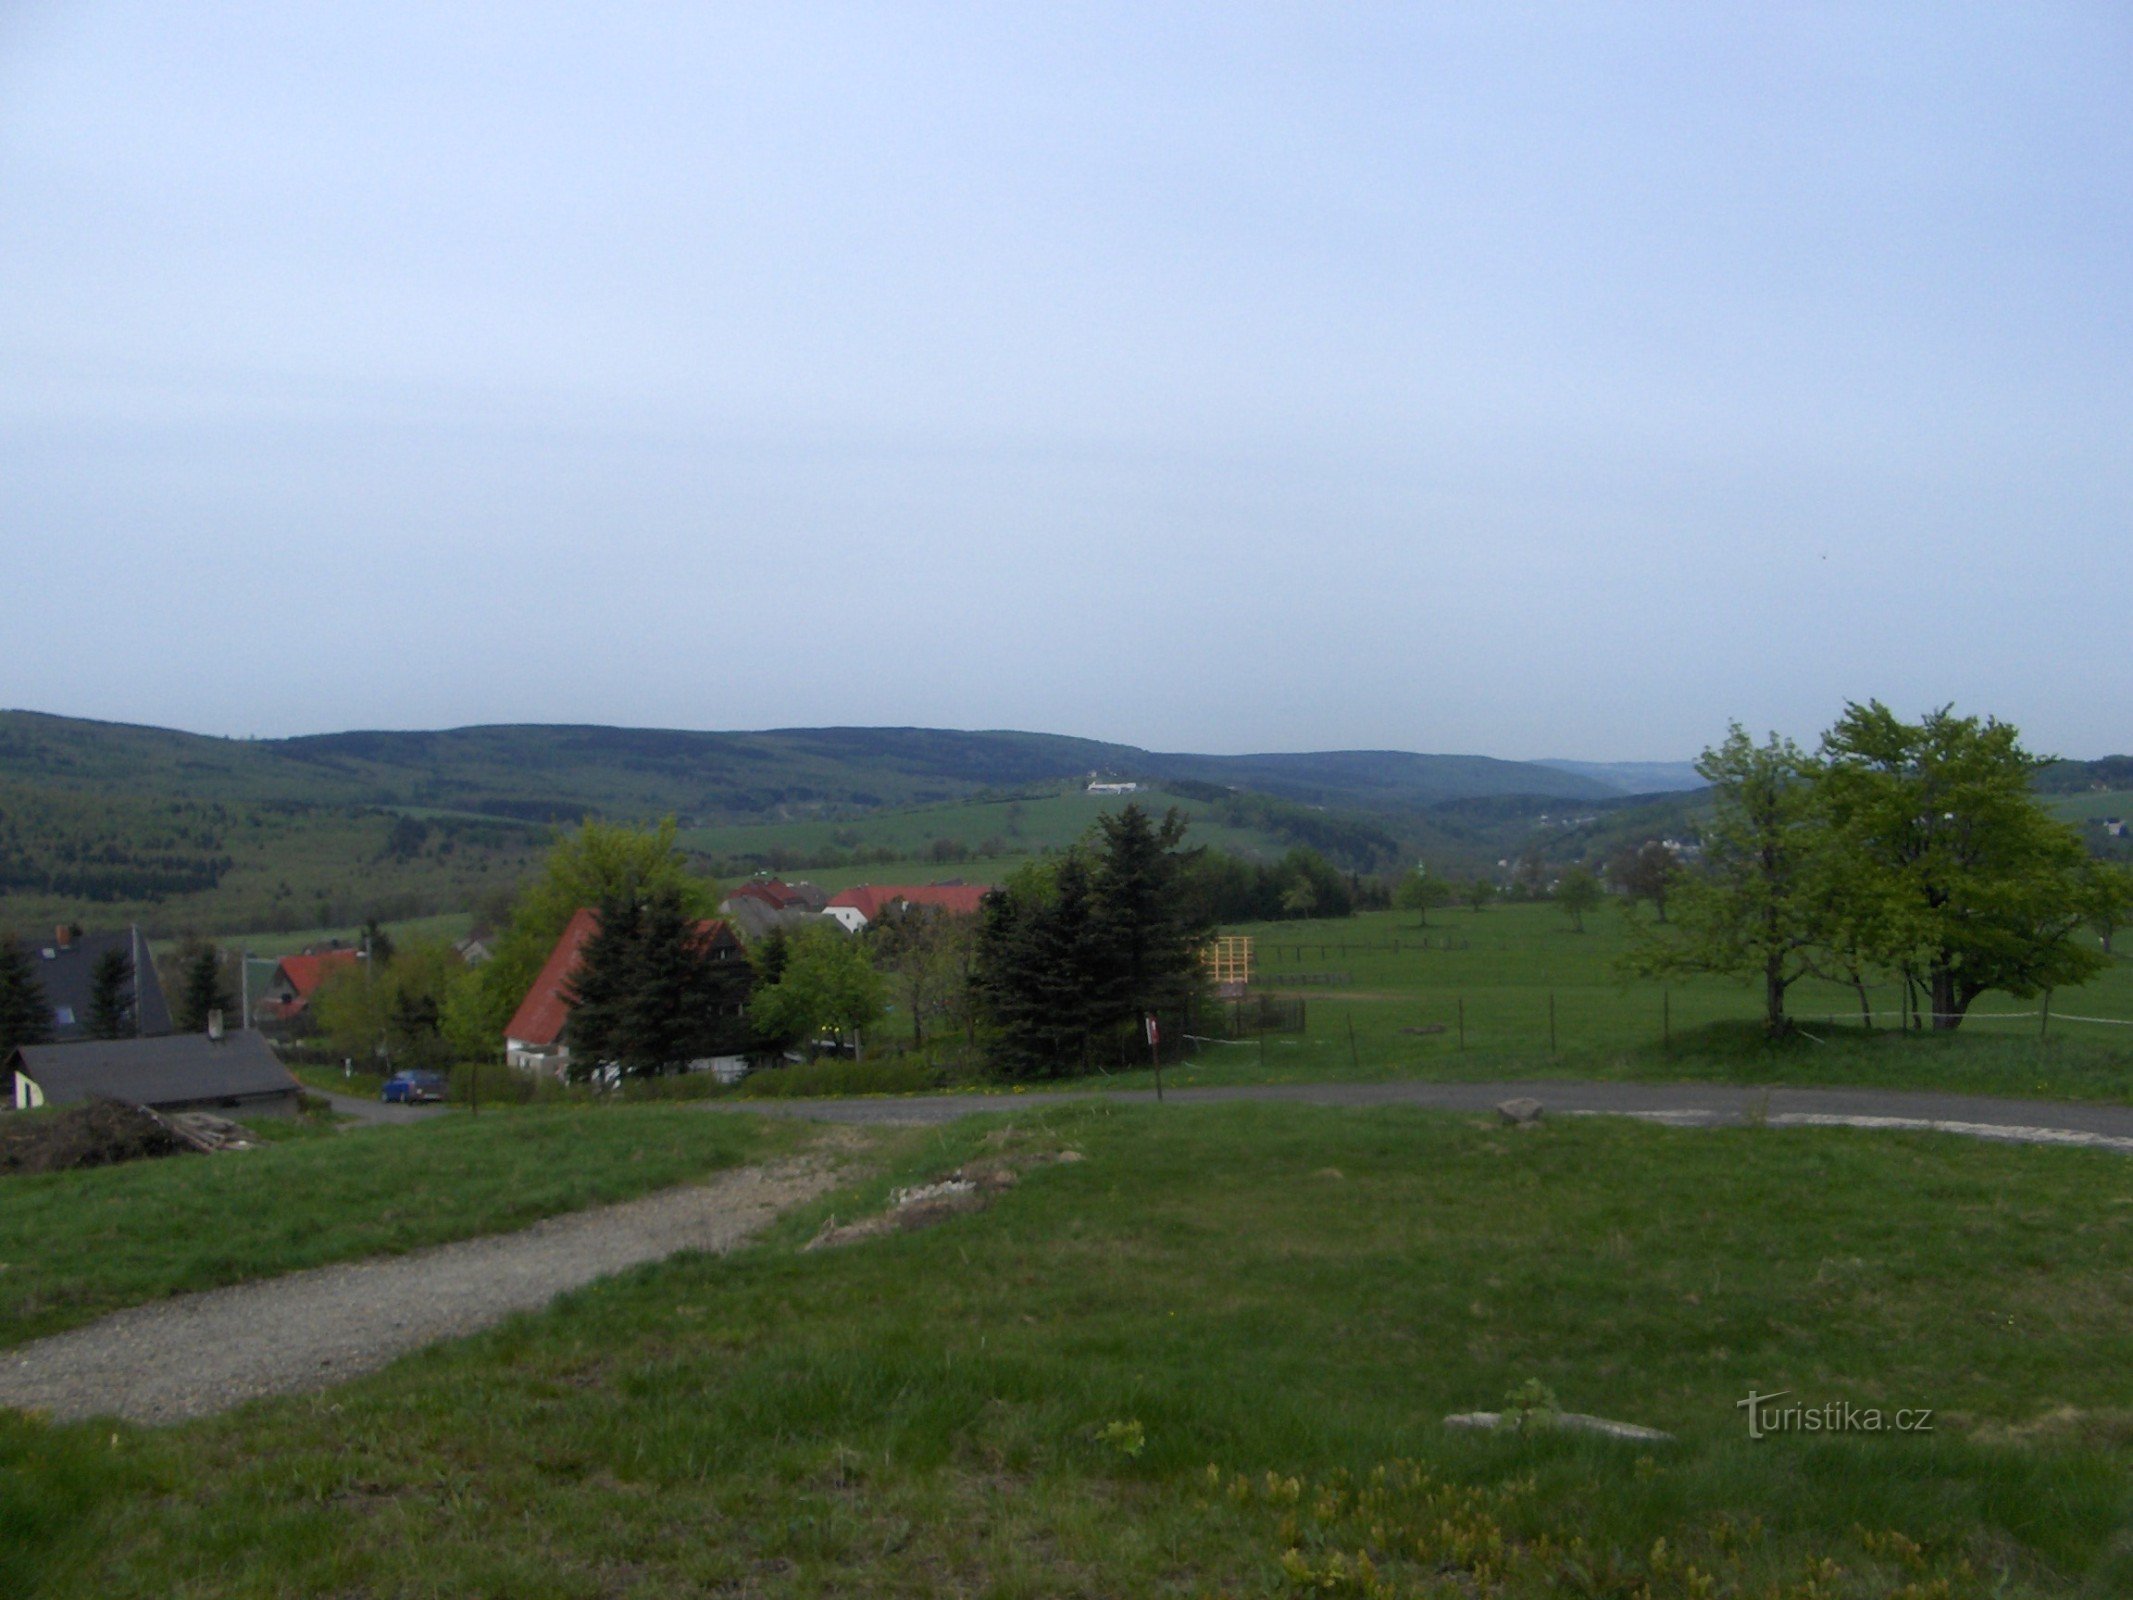 Utsikt mot Mount St. Kateřiny och kamenné vrch-ryggen